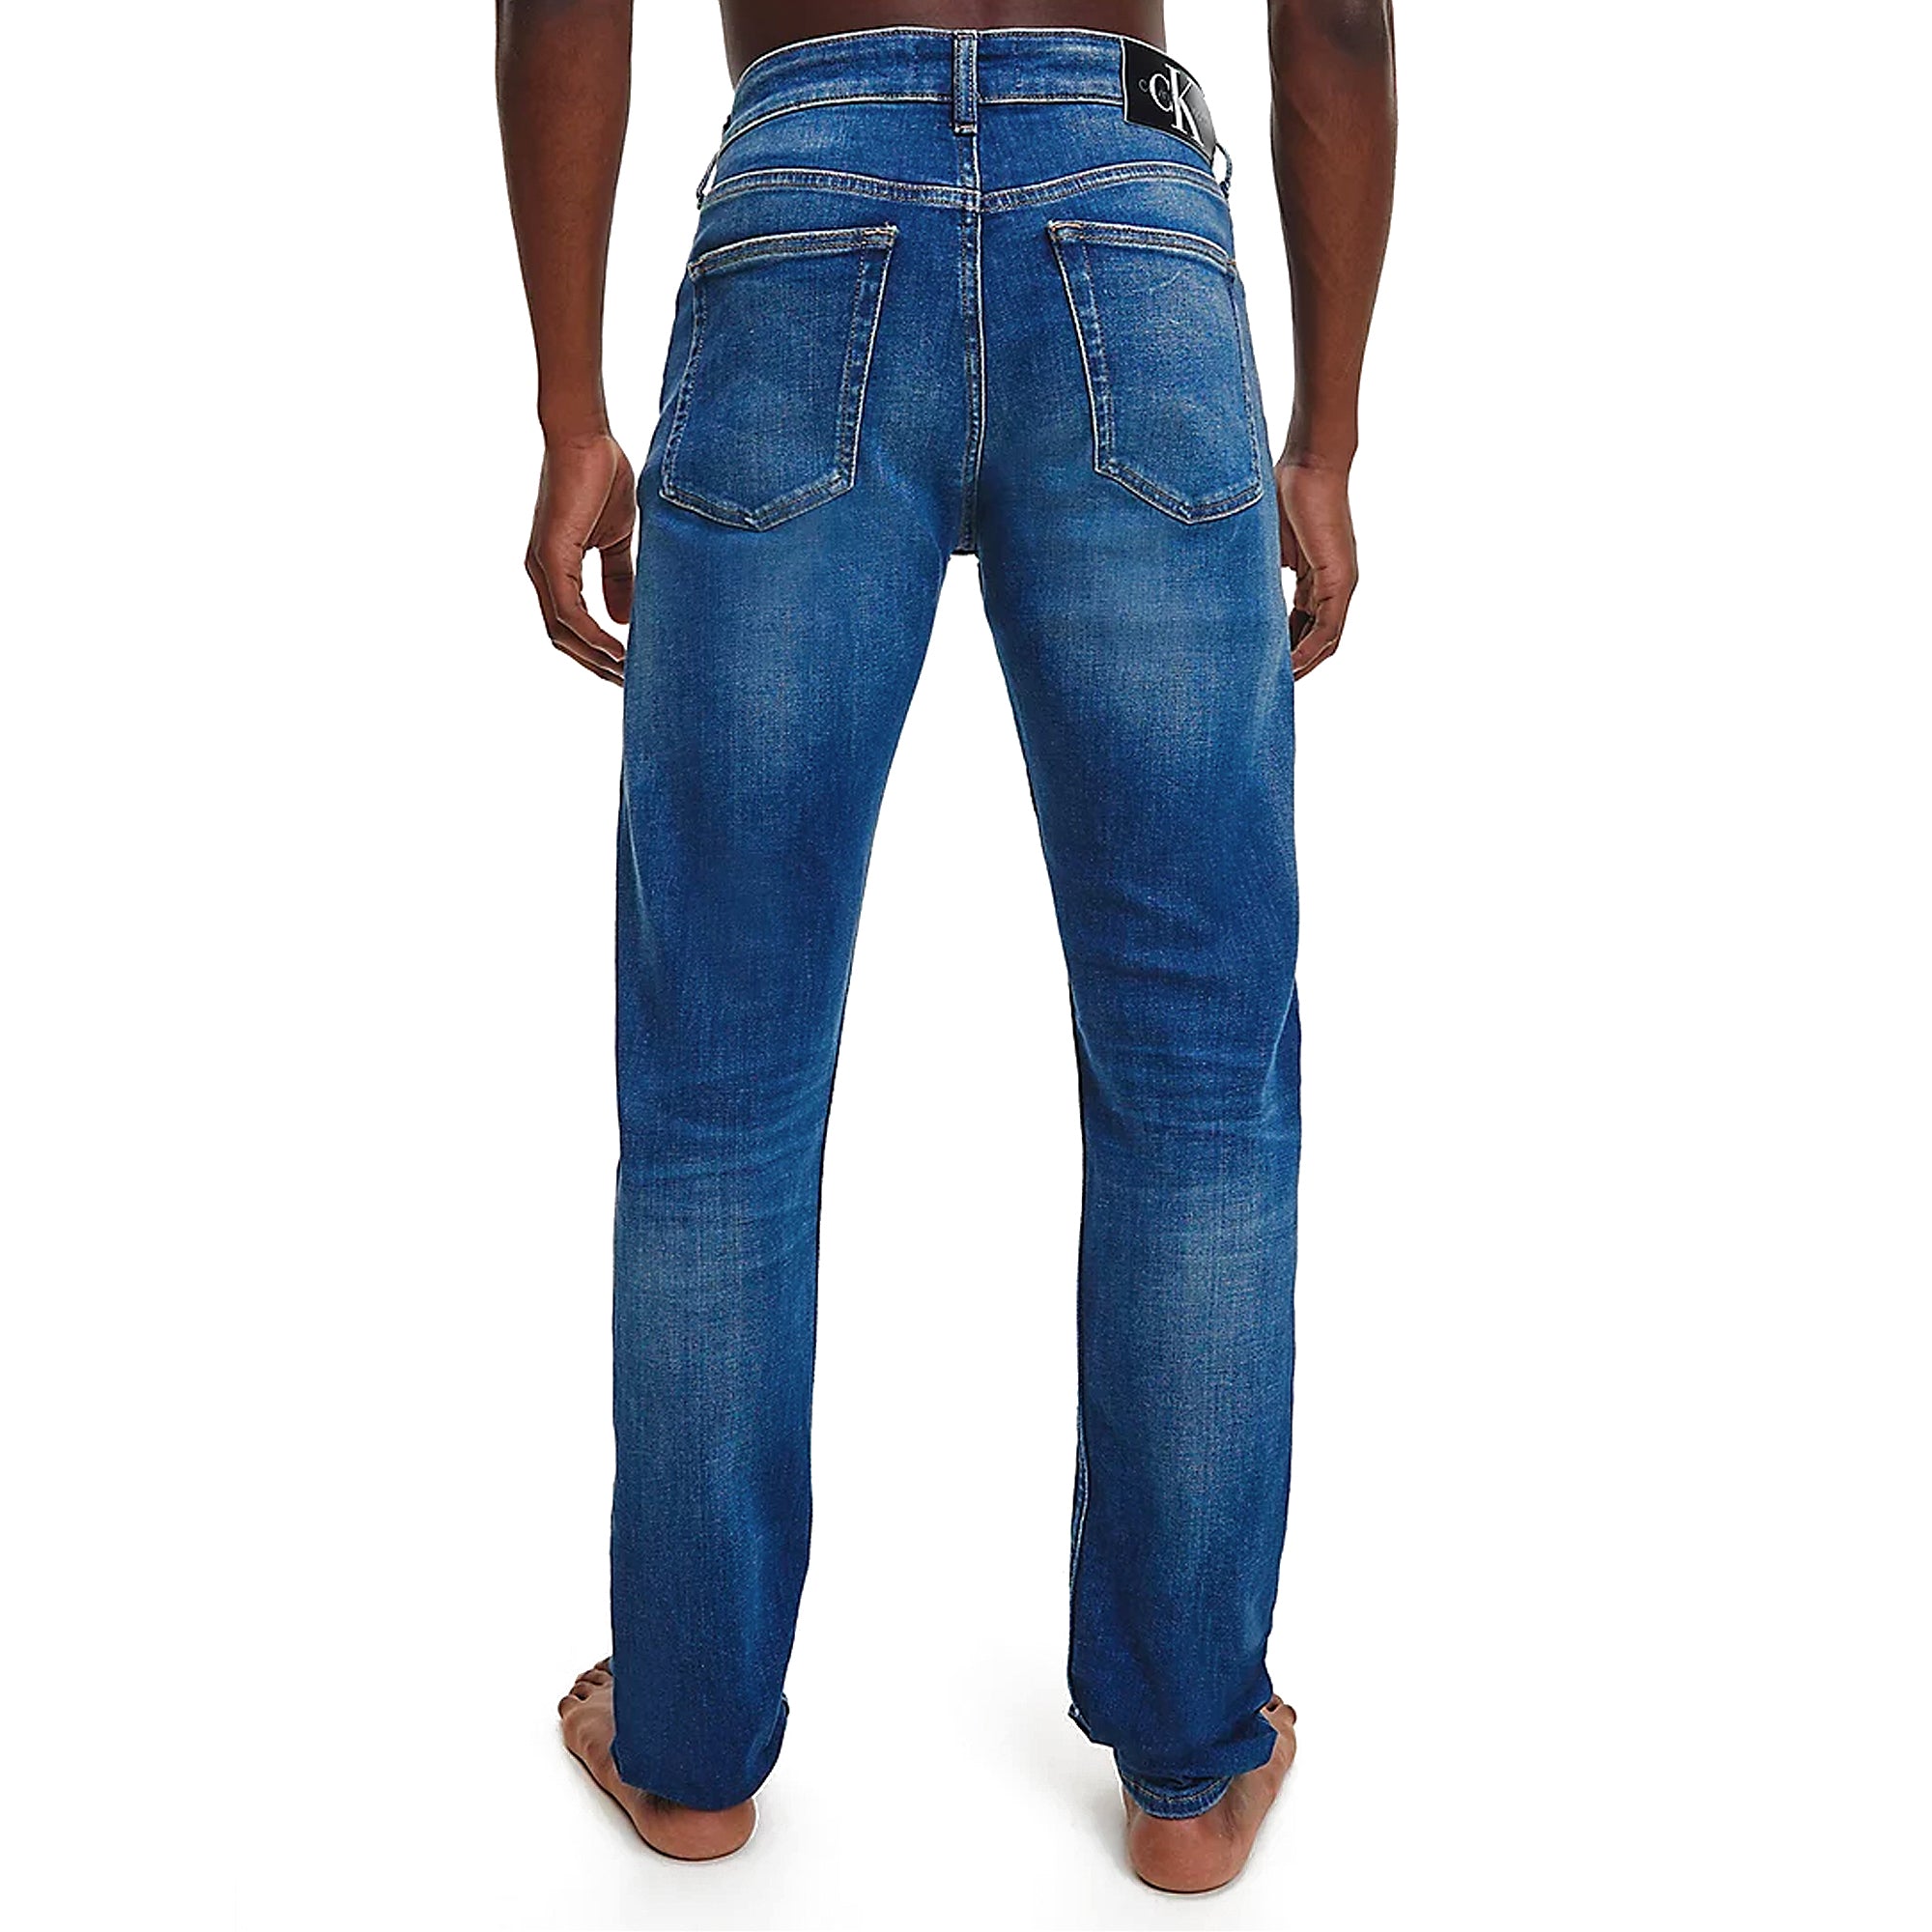 Calvin Klein Slim Tapered Jeans - Stone Wash Mid Blue